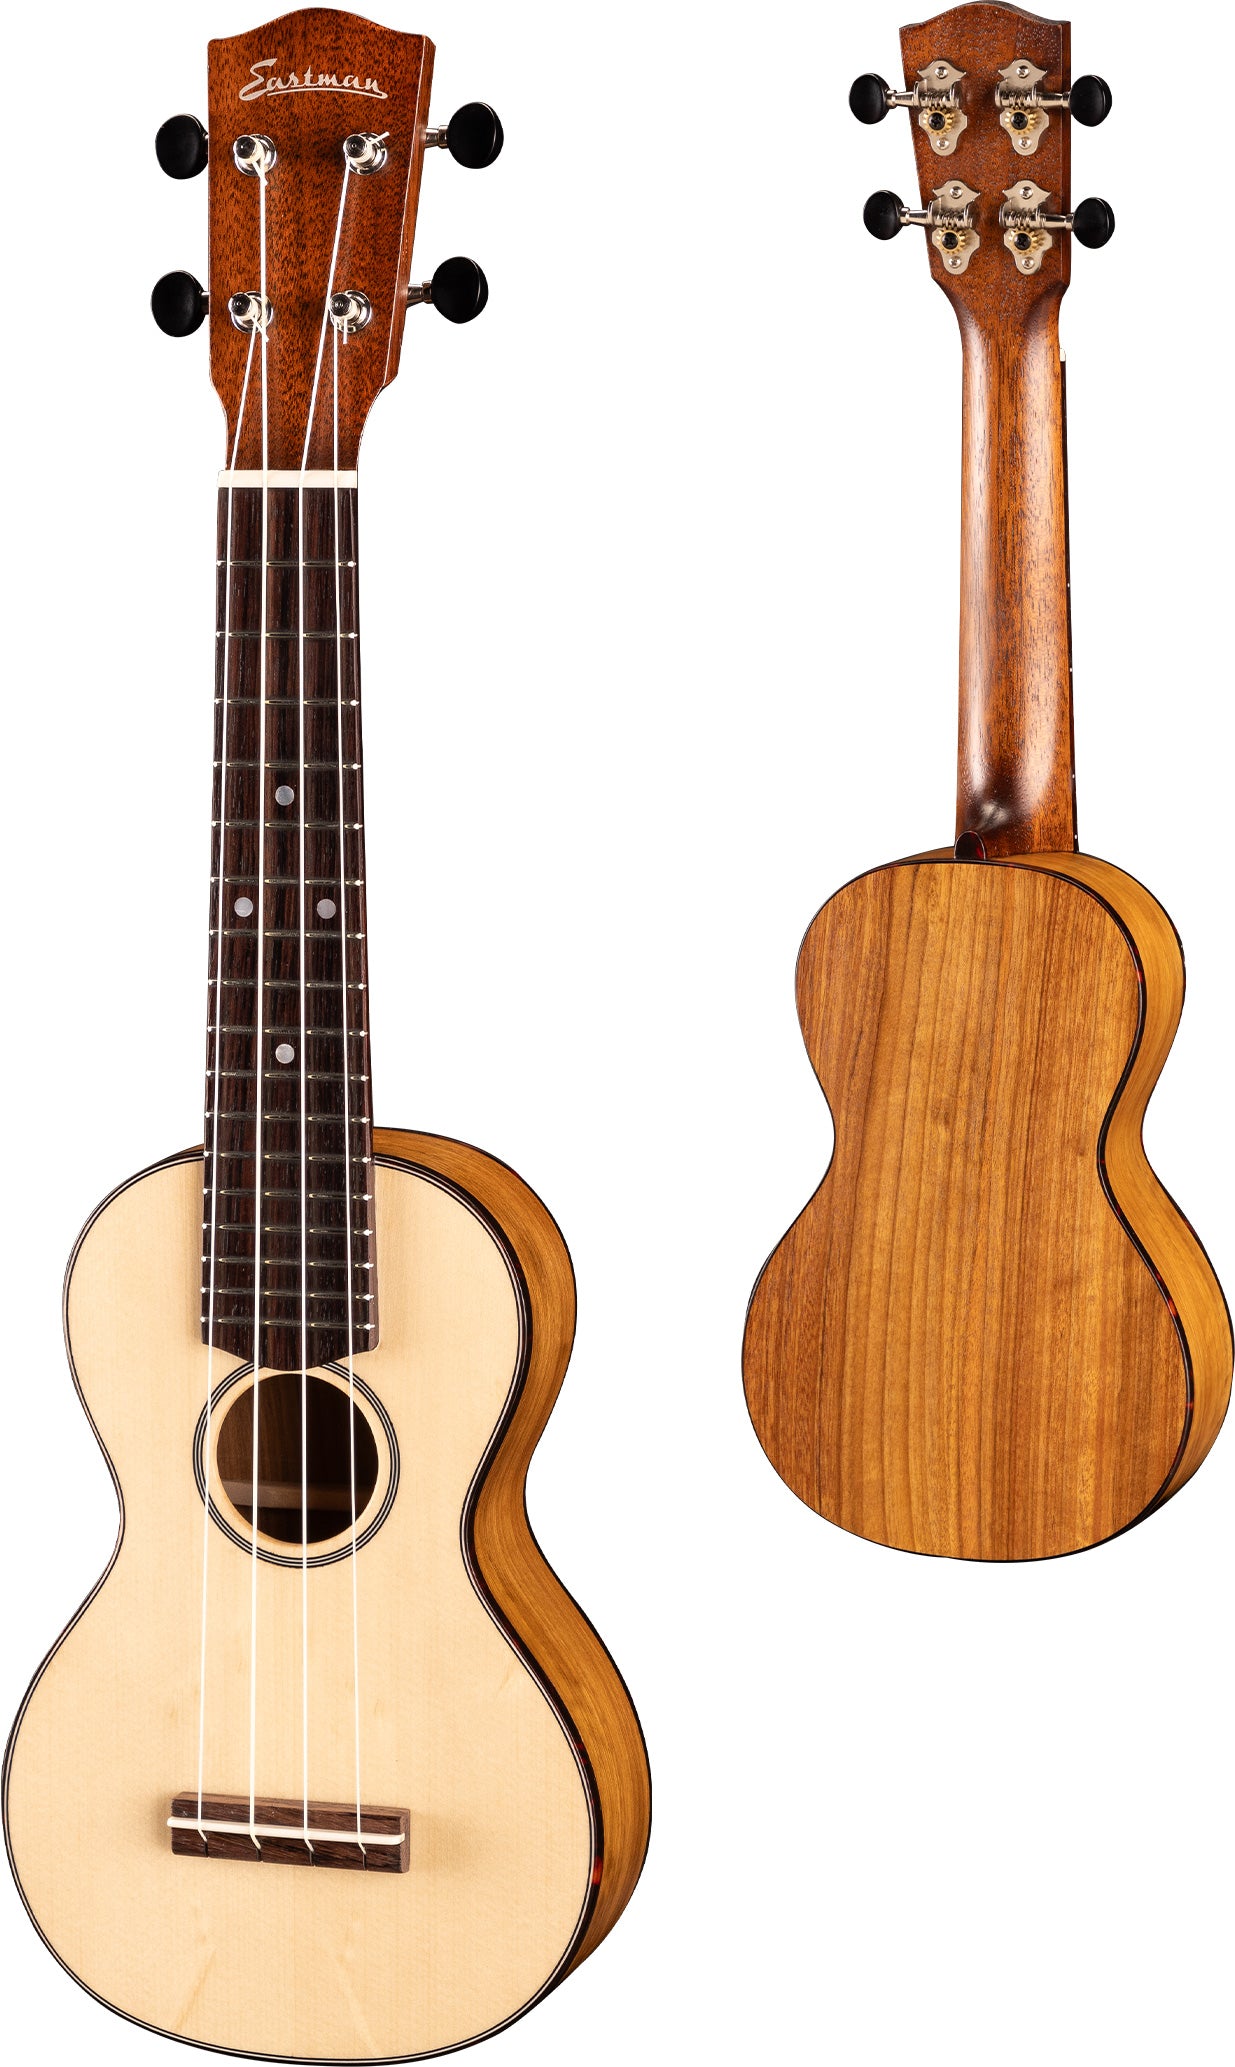 Eastman EU1-S All Solid Spruce Top Soprano Ukelele, Ukelele for sale at Richards Guitars.